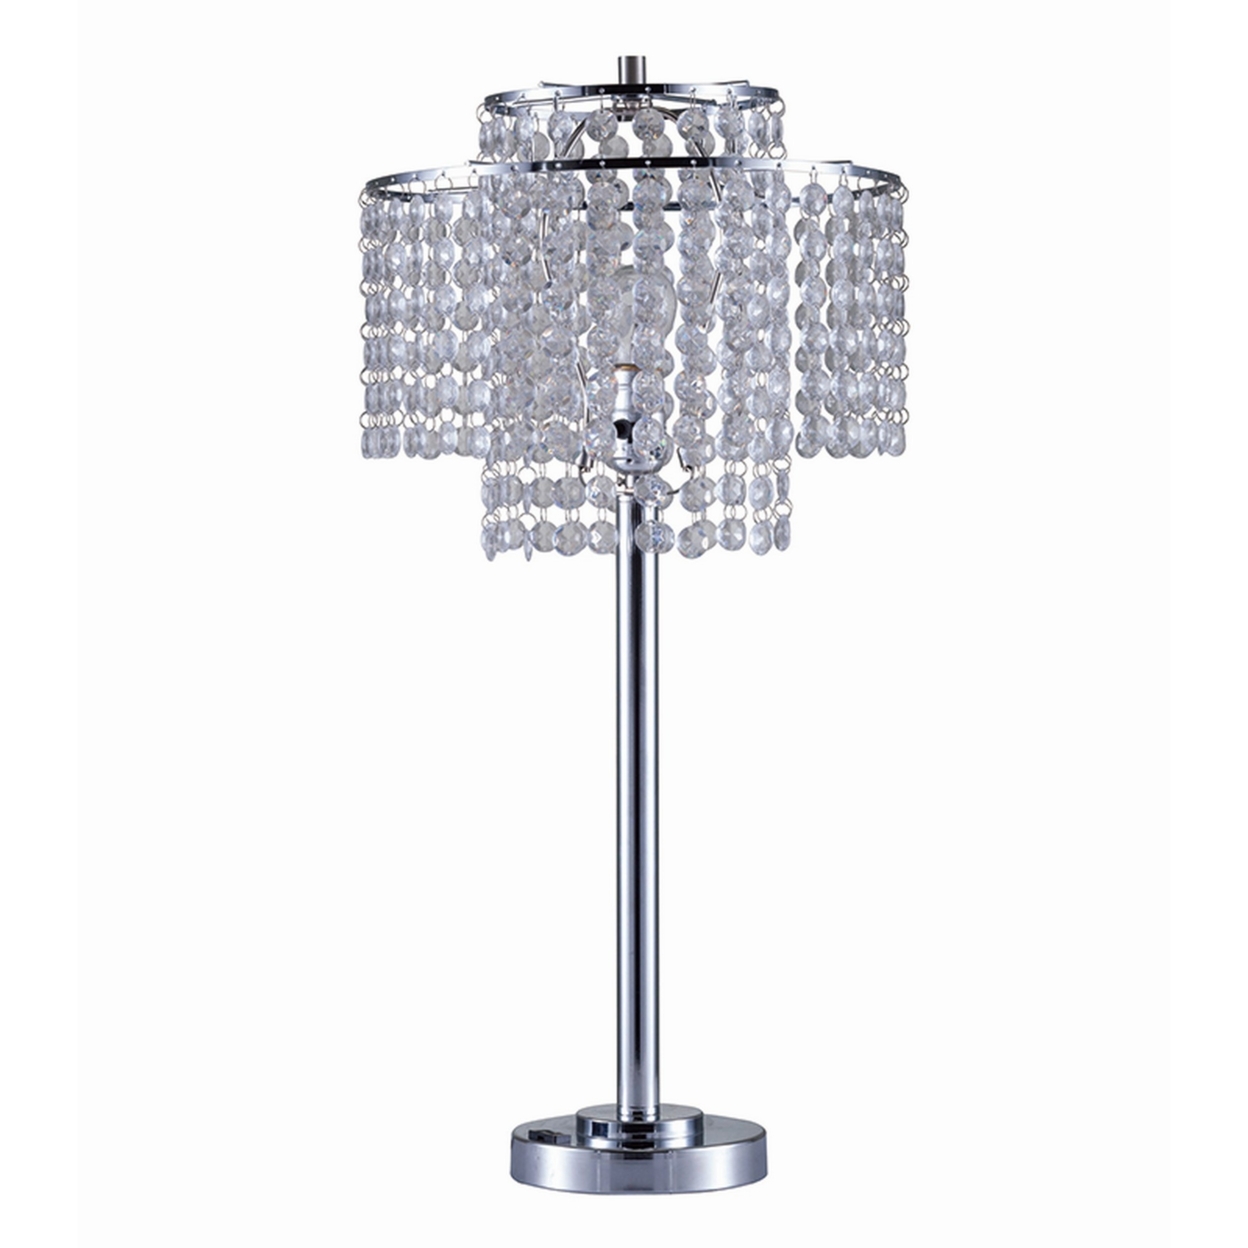 Metal Table Lamp With Hanging Acrylic Beads And USB Plugin, Silver- Saltoro Sherpi